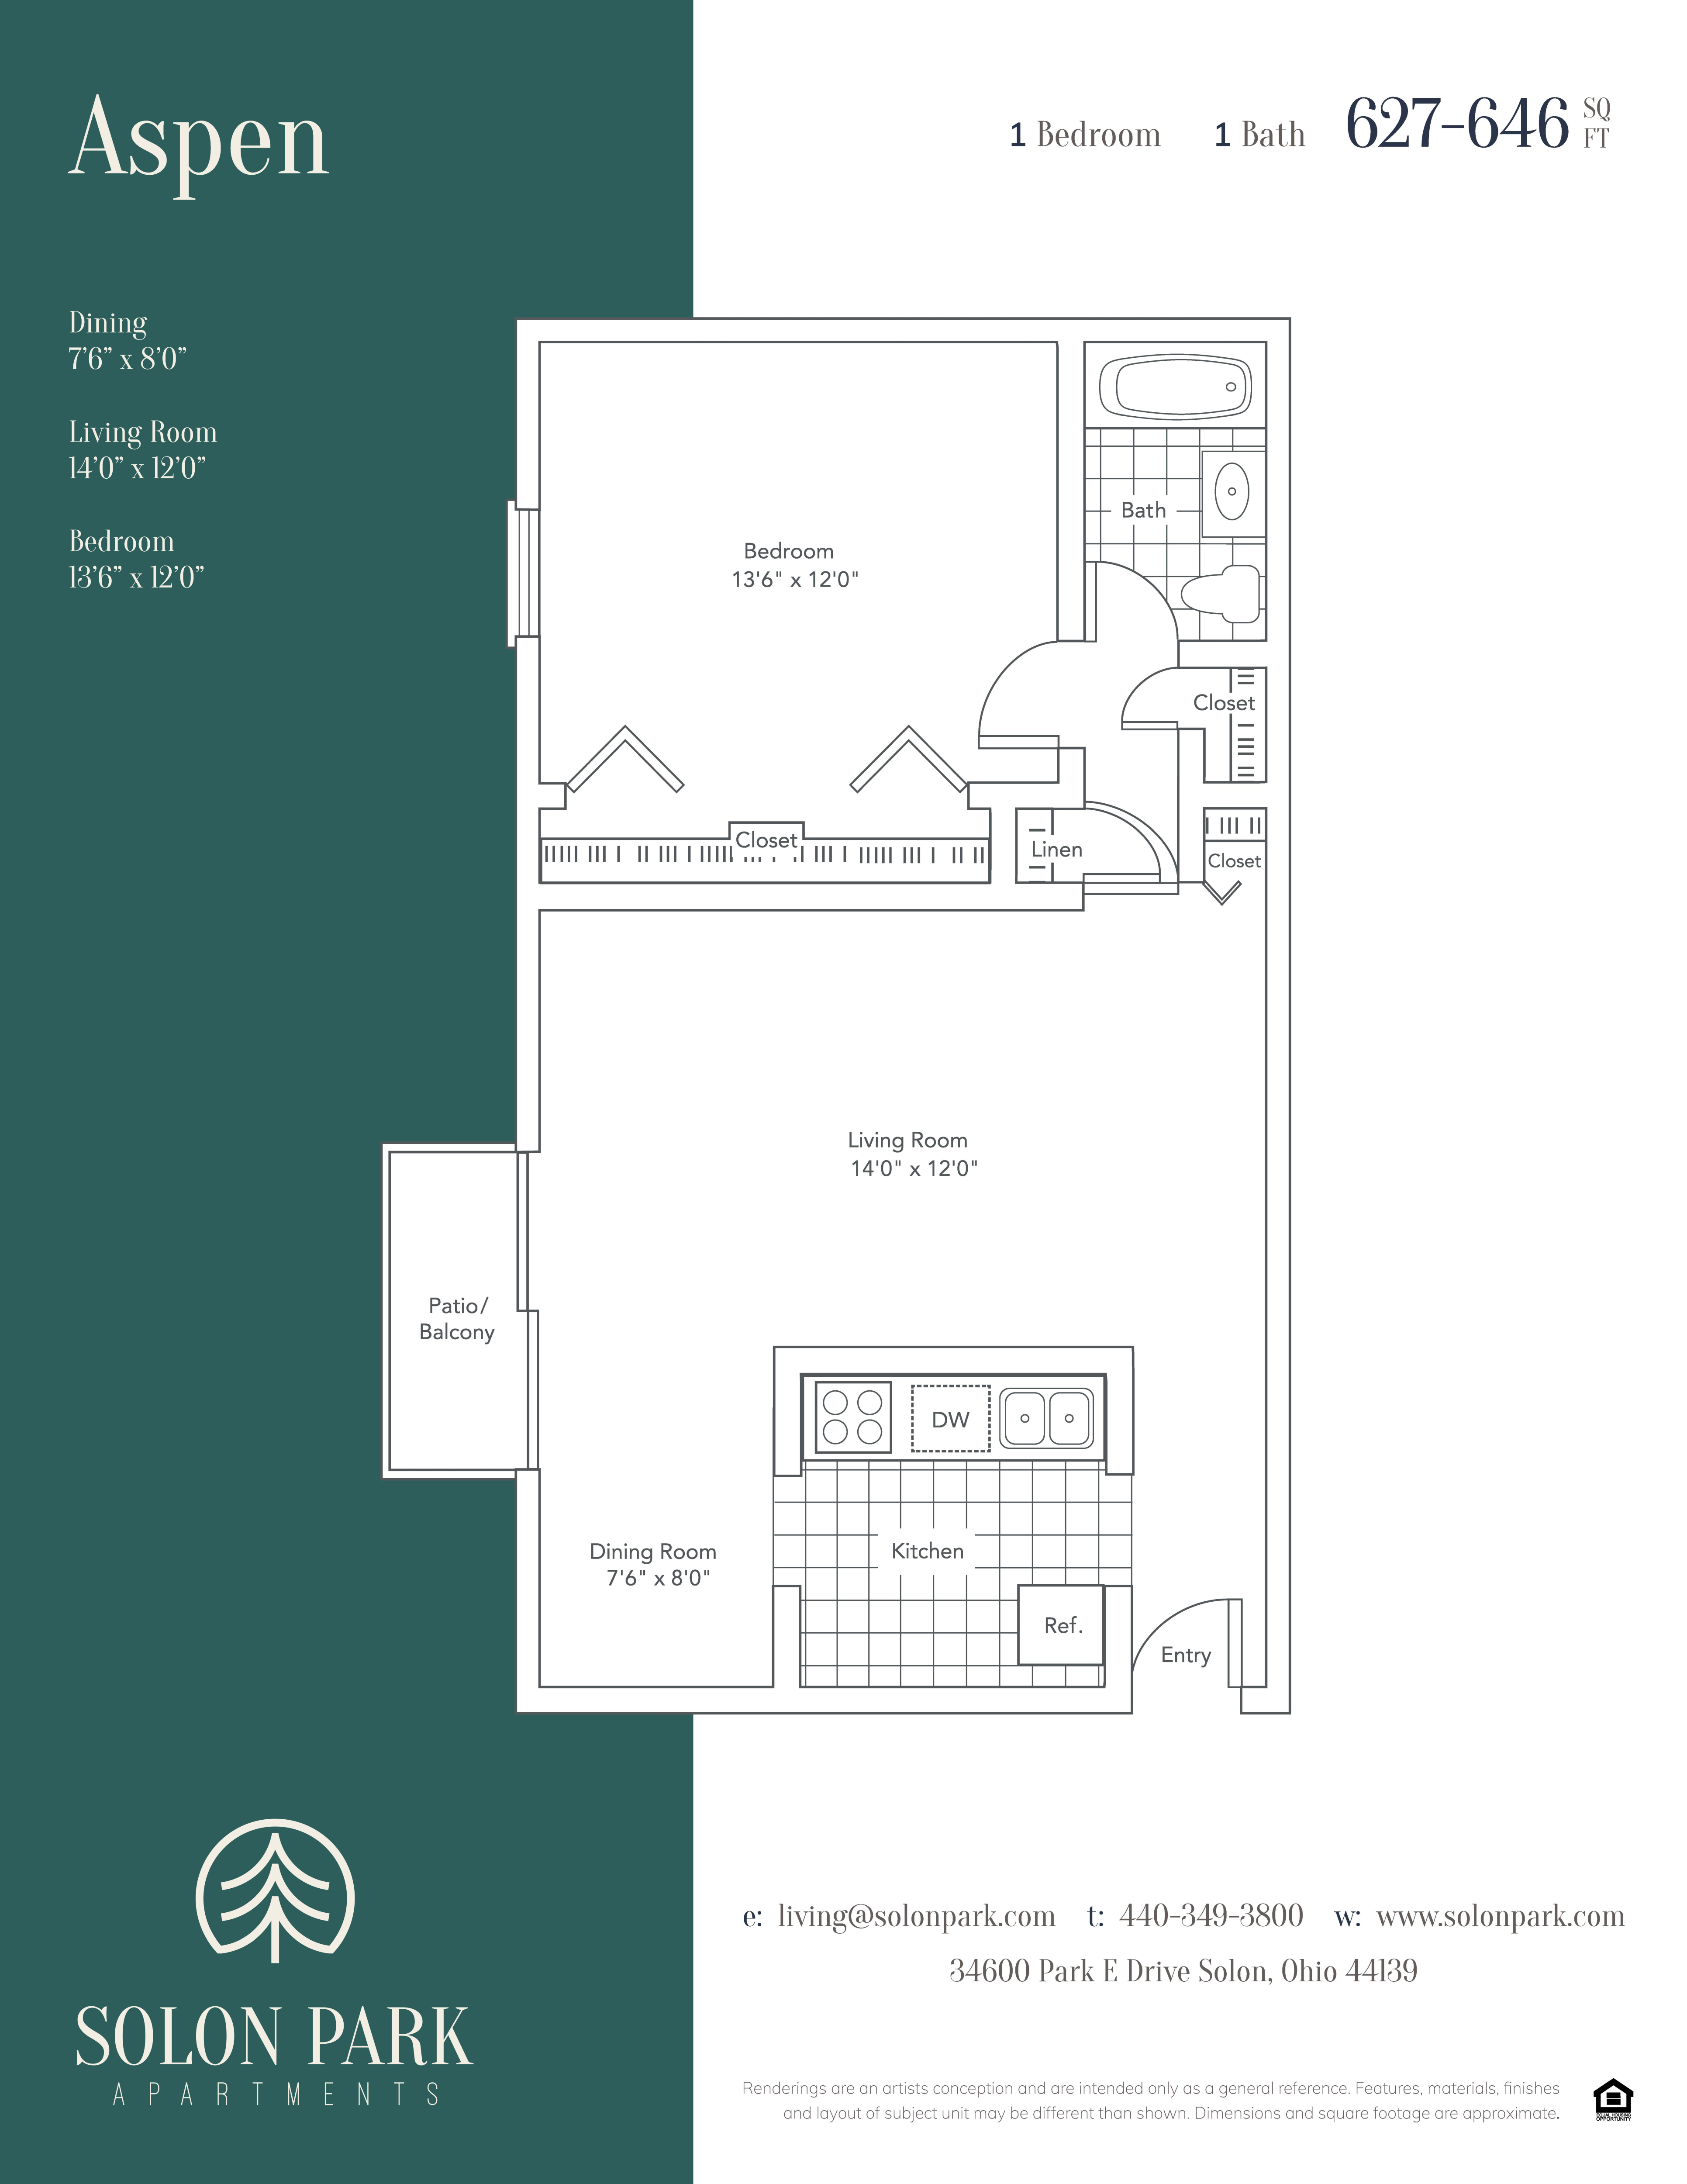 Solon Park Floorplan Sheet Aspen.jpg